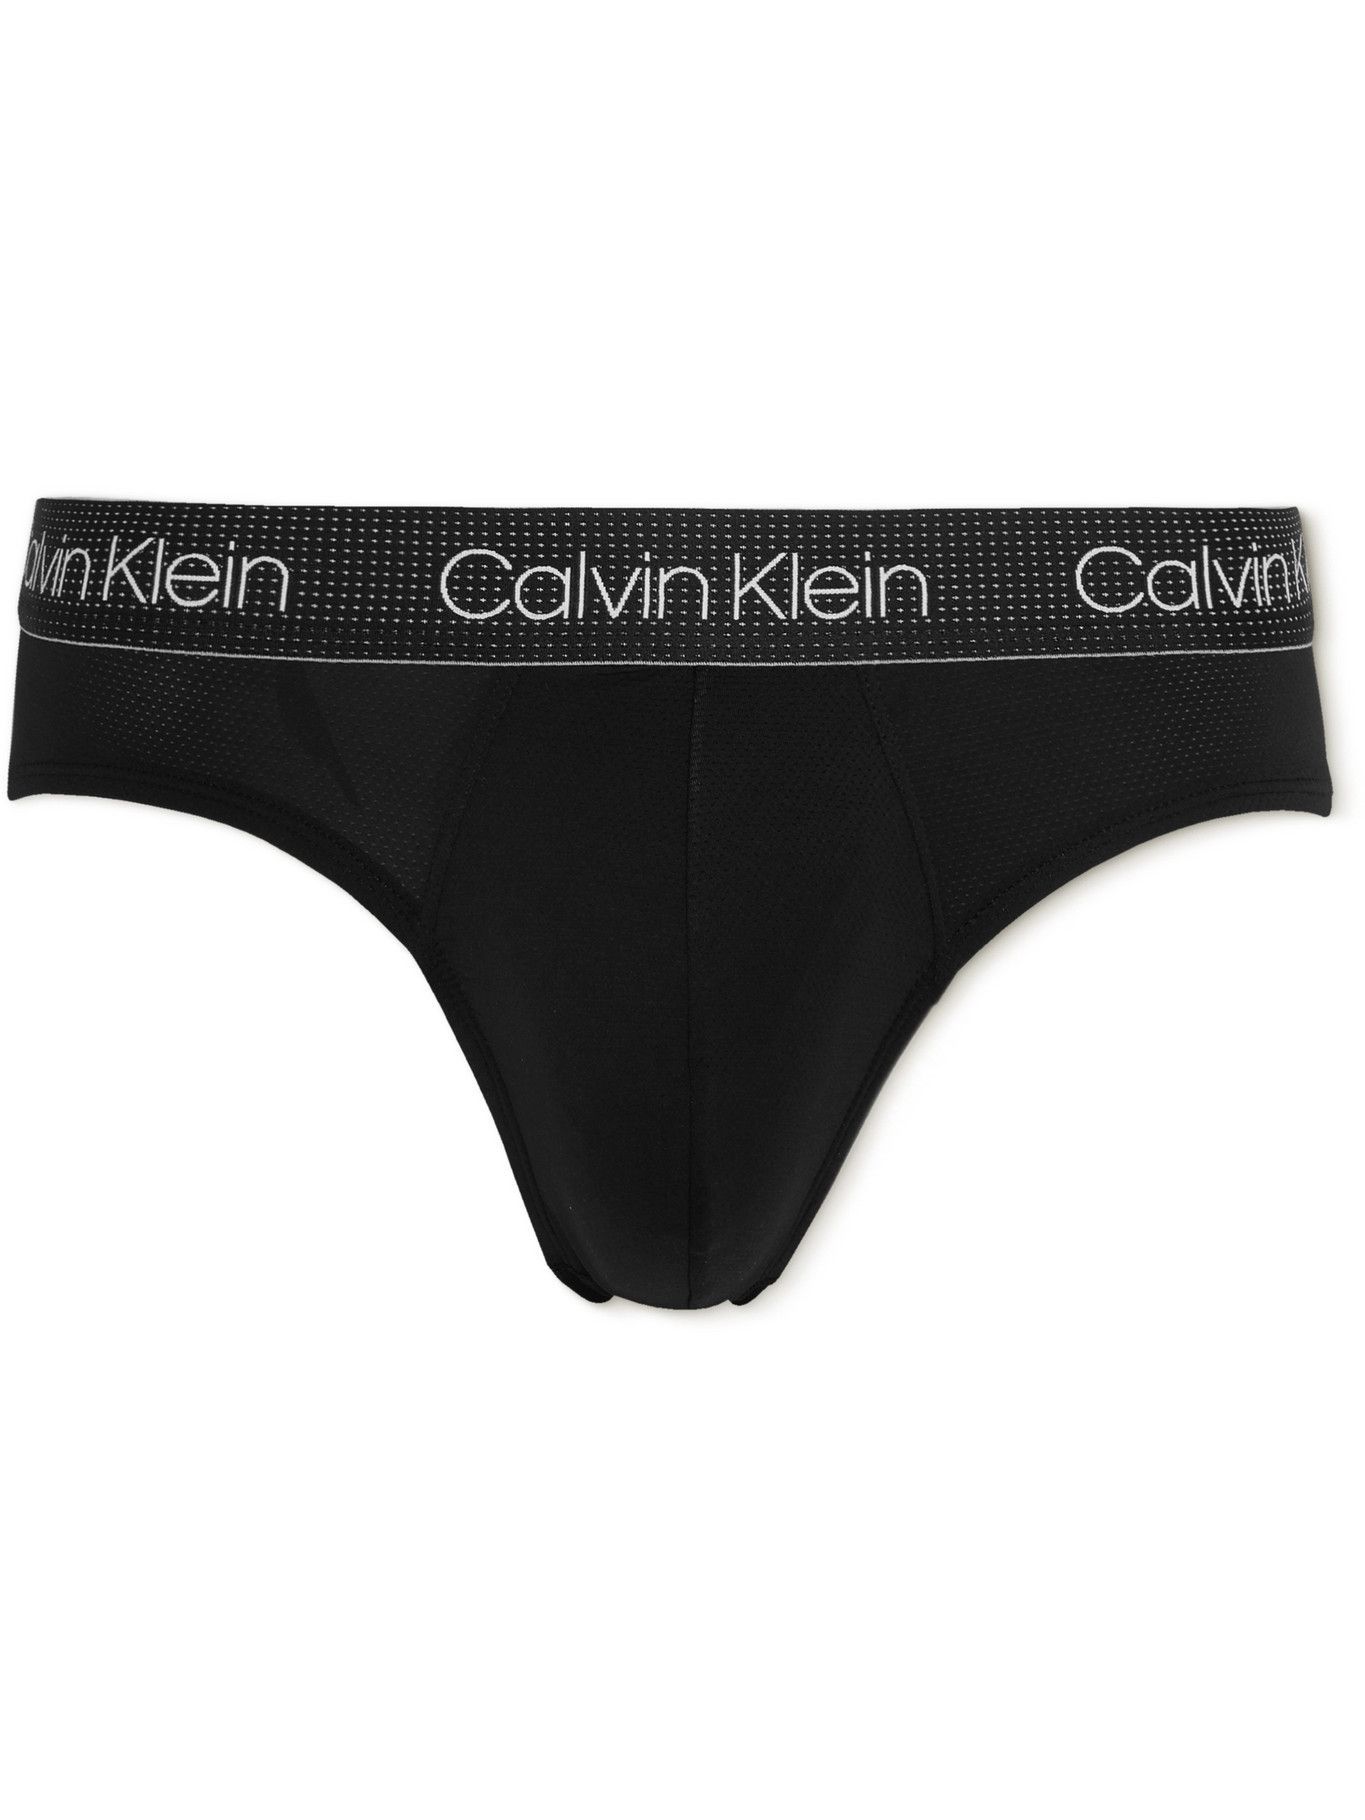 CALVIN KLEIN UNDERWEAR - Air FX Micro-Mesh Briefs - Black Calvin Klein  Underwear